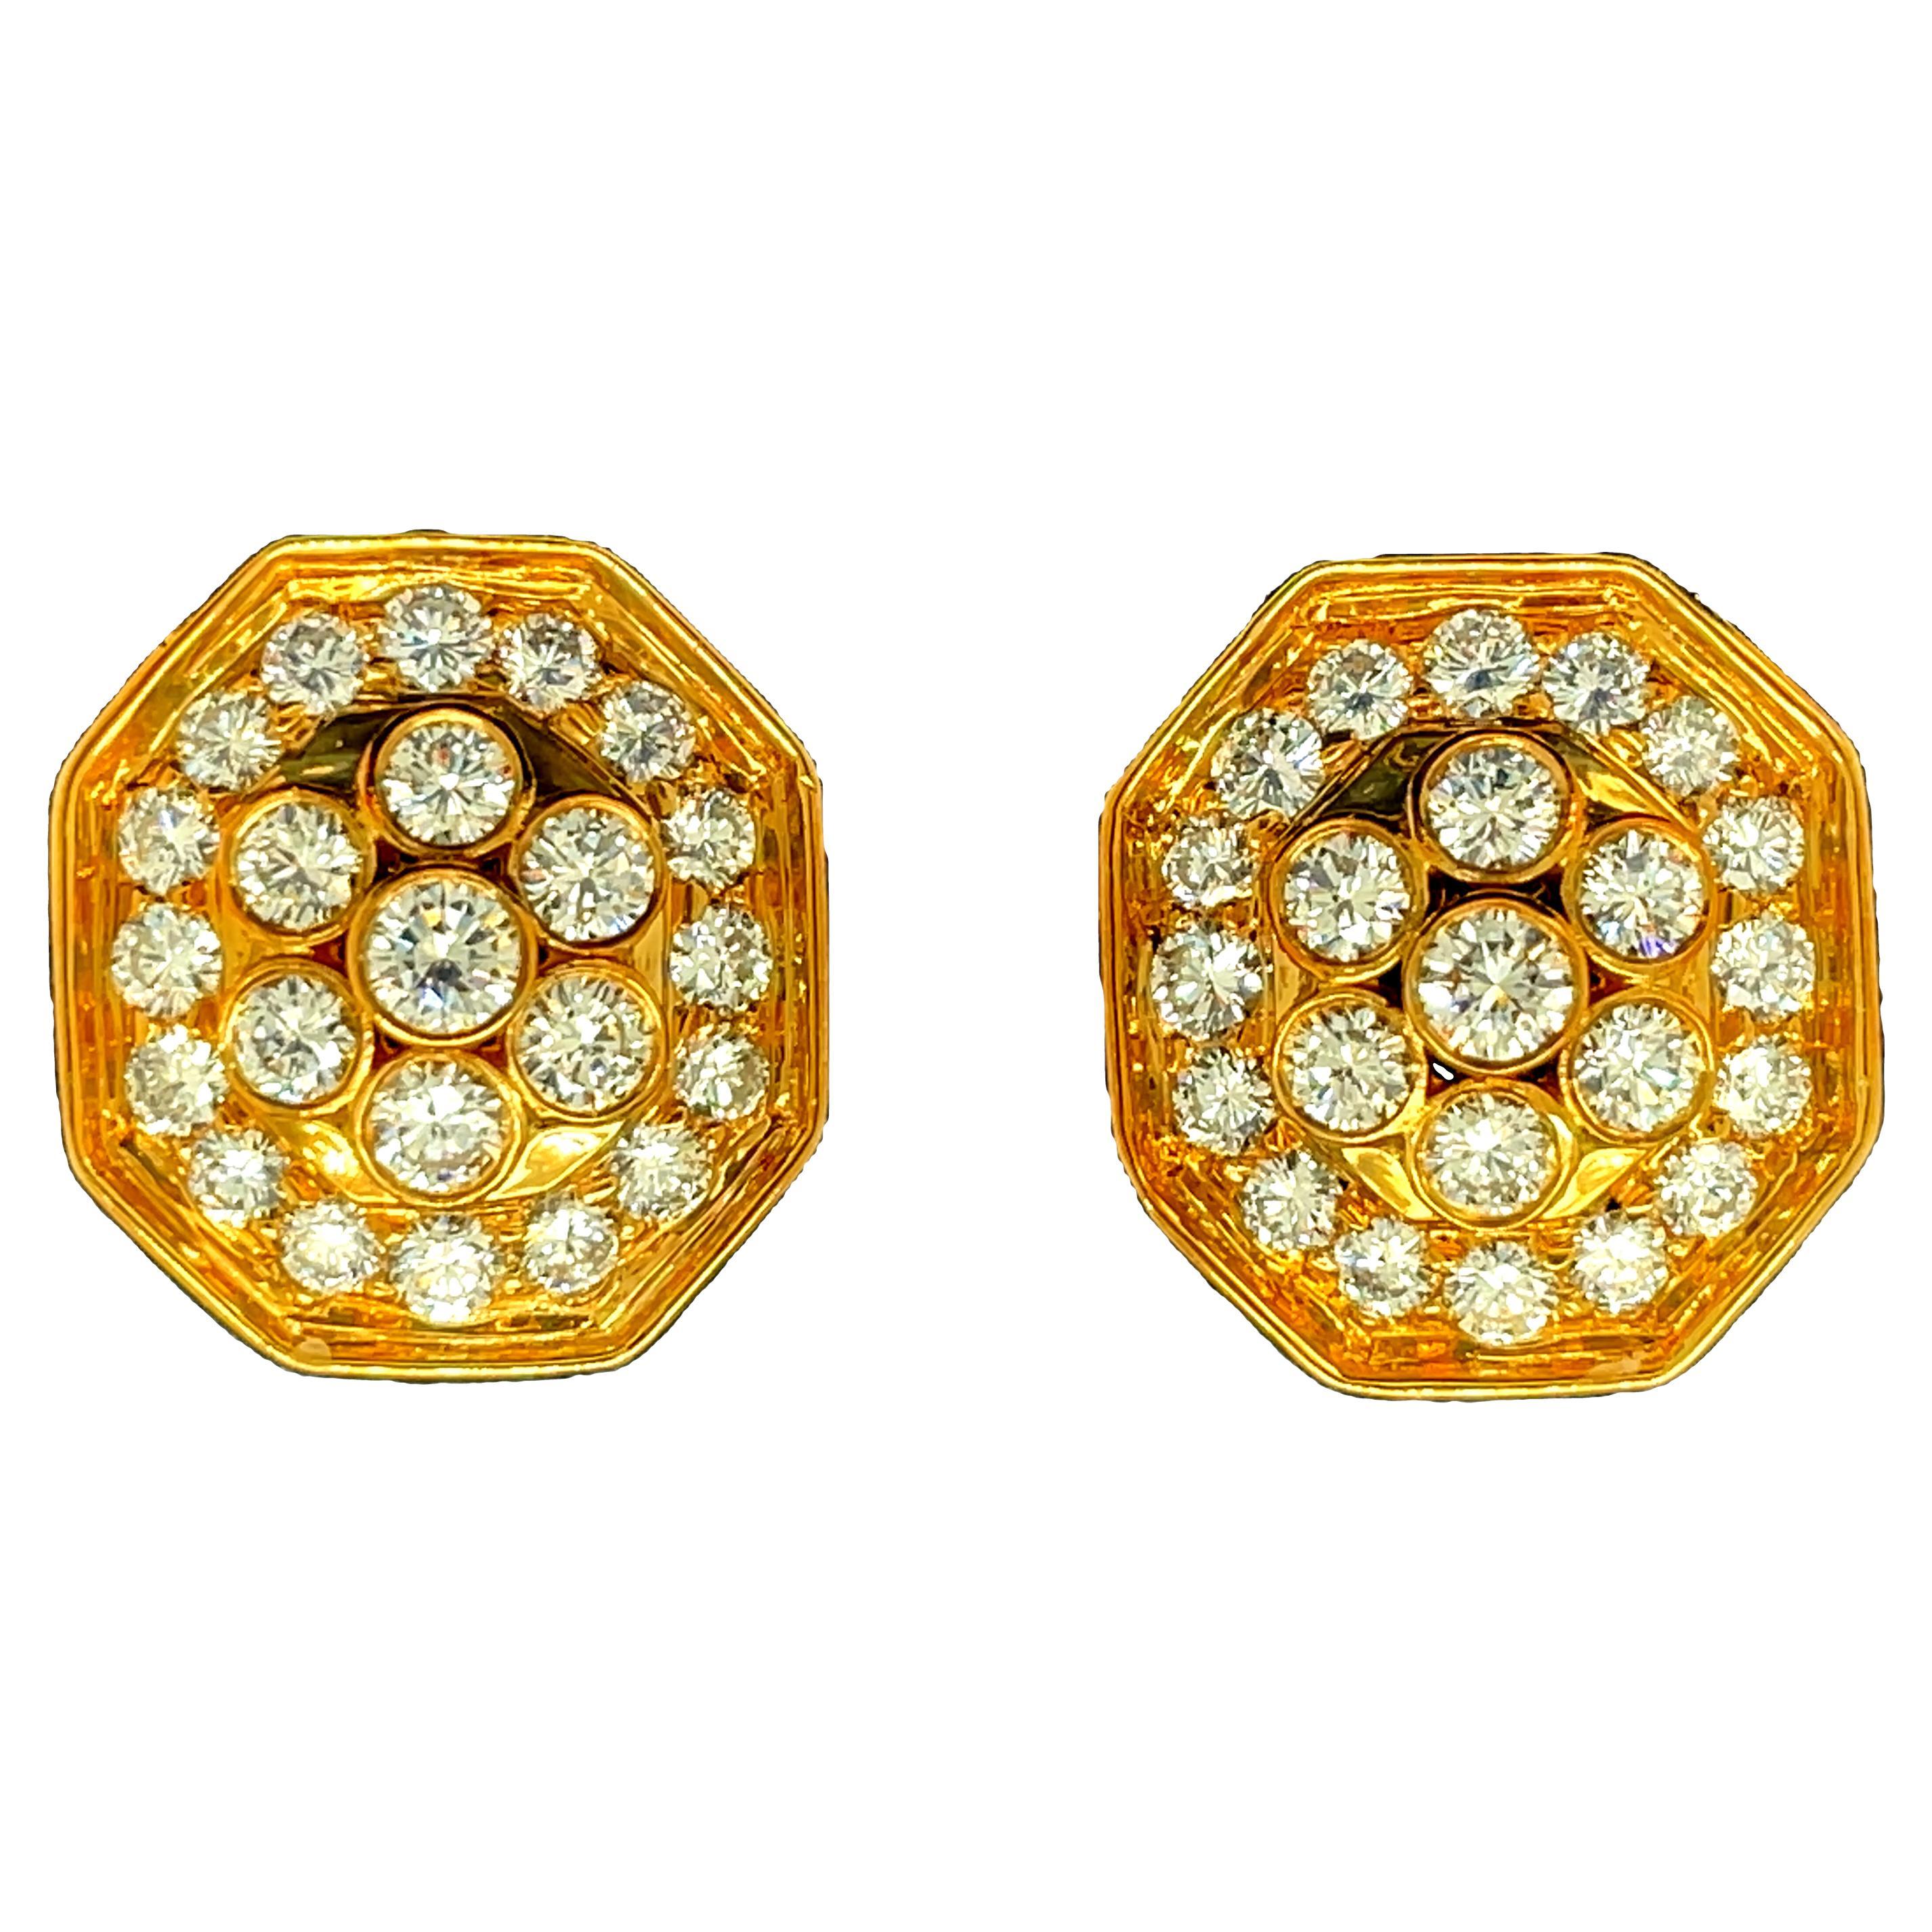 Vintage Harry Winston Cluster Diamond Clip on Earrings 18K Yellow Gold